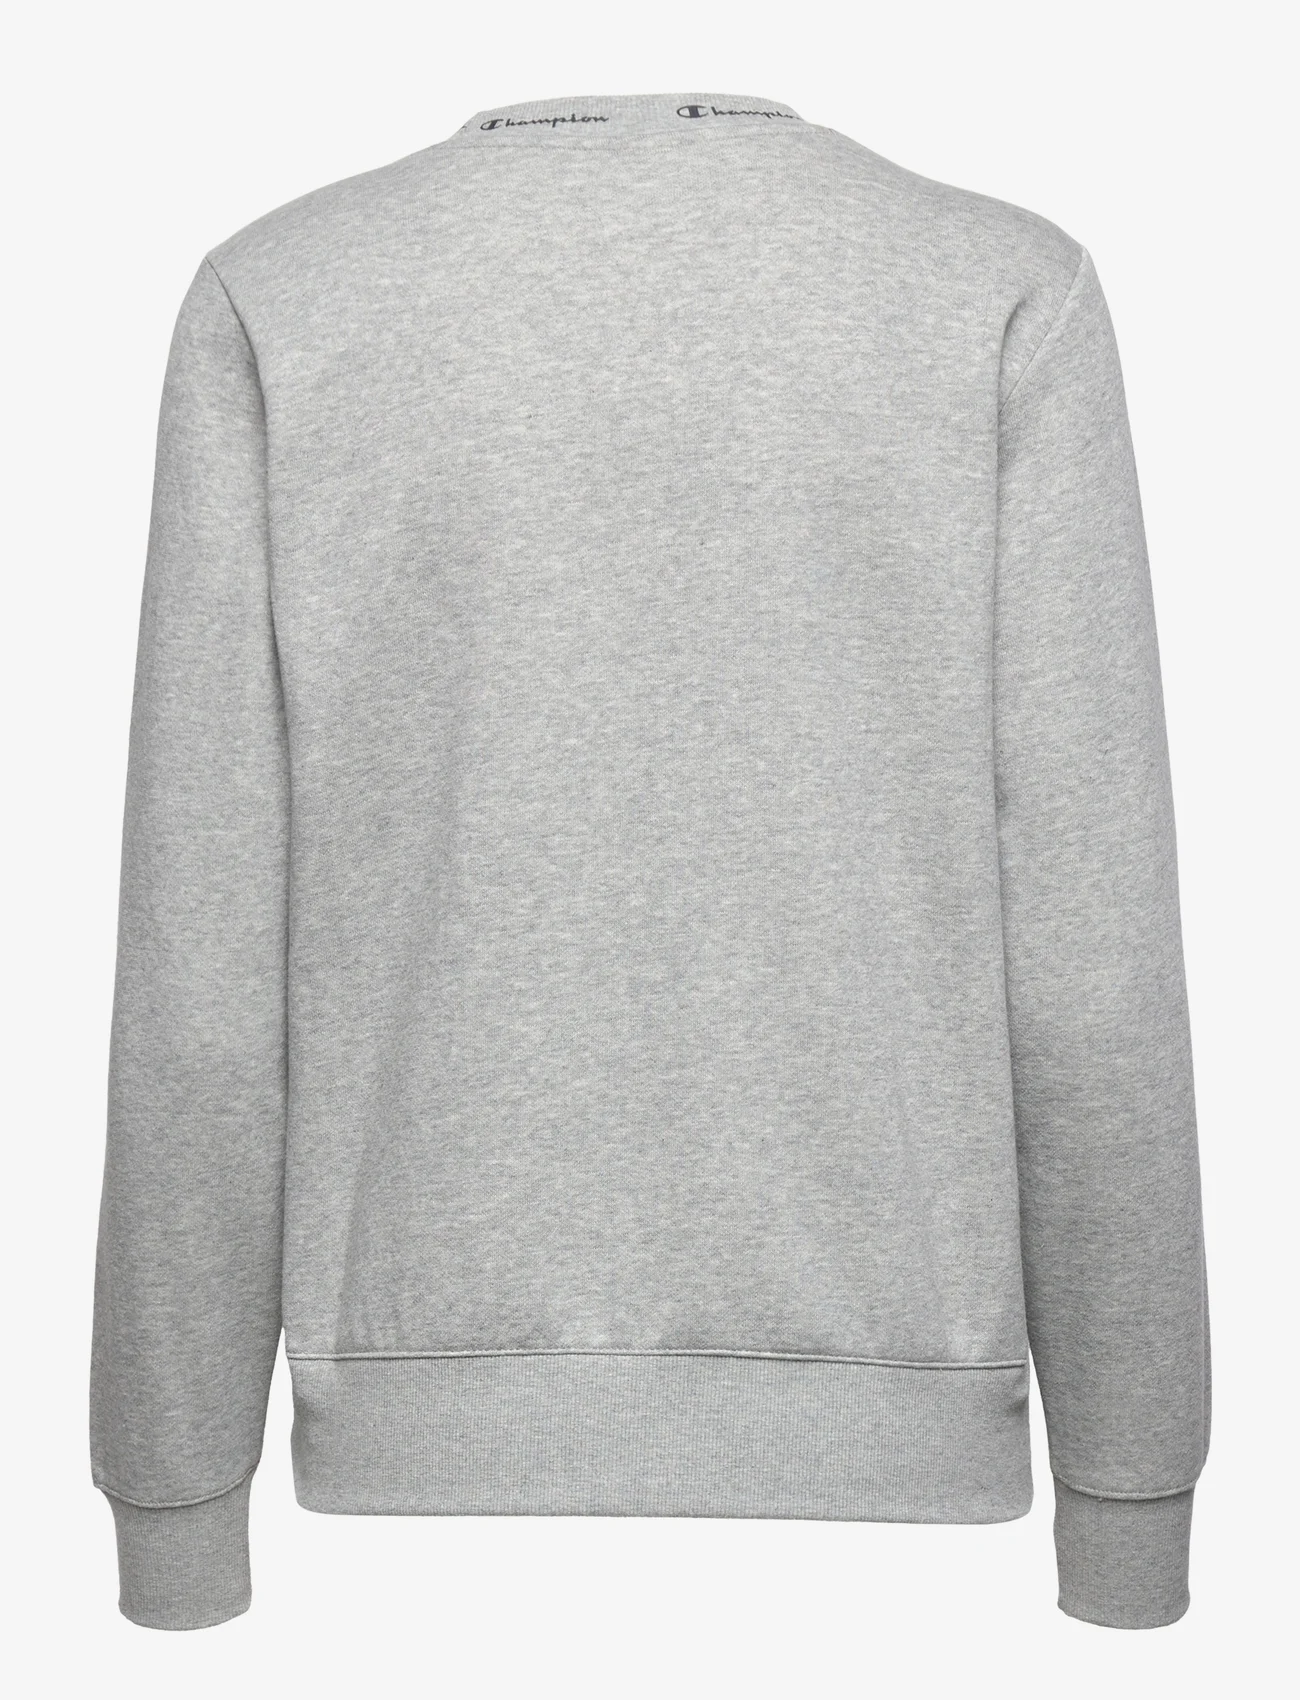 Champion - Crewneck Sweatshirt - gray melange light - 1